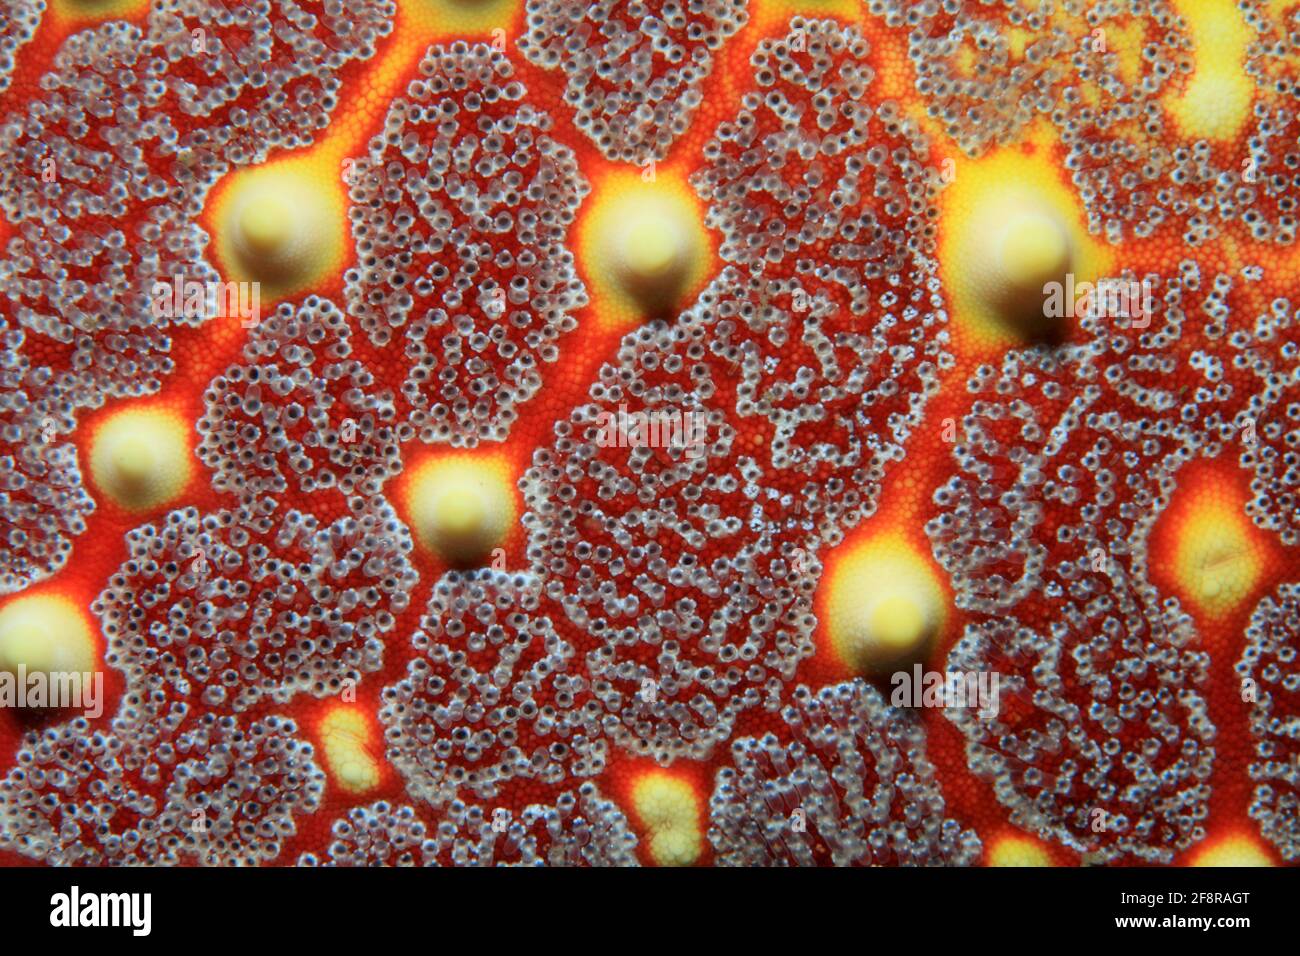 Nahaufnahme Seesterns (Indonesien) - Colse up of Sea star (Indonesia) Stock Photo